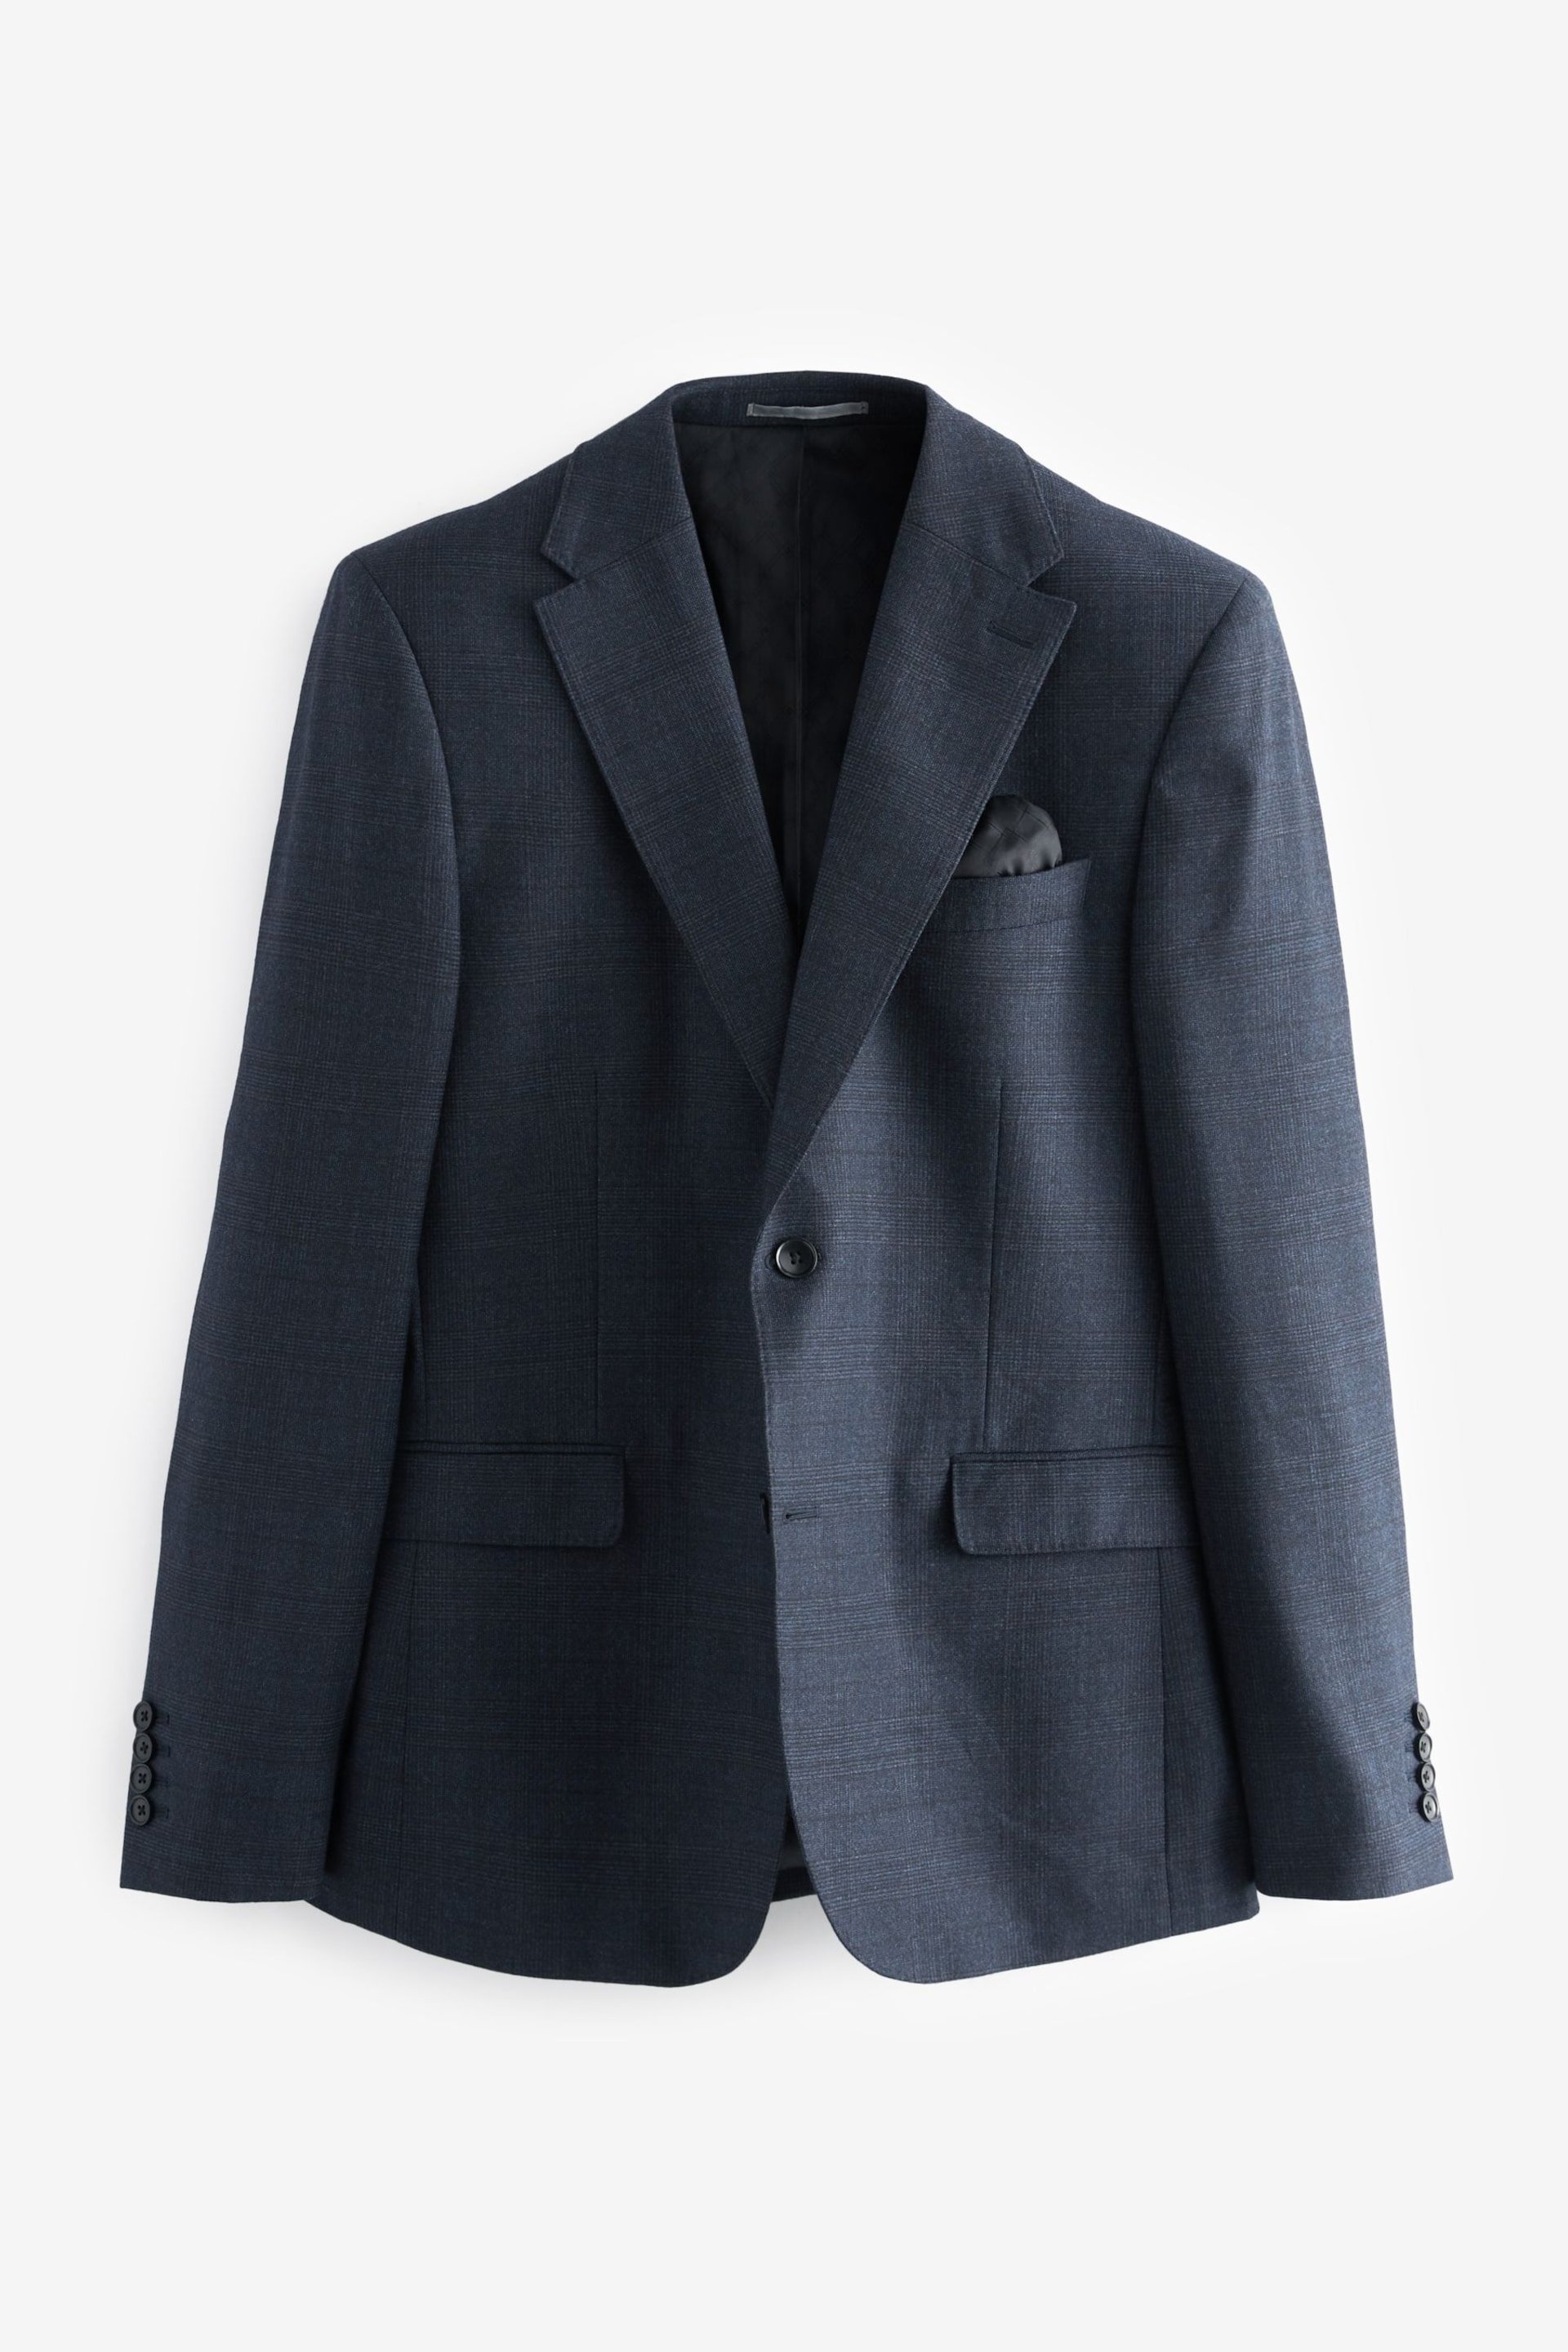 Navy Blue Slim Fit Signature Cerruti Wool Check Suit Jacket - Image 7 of 12